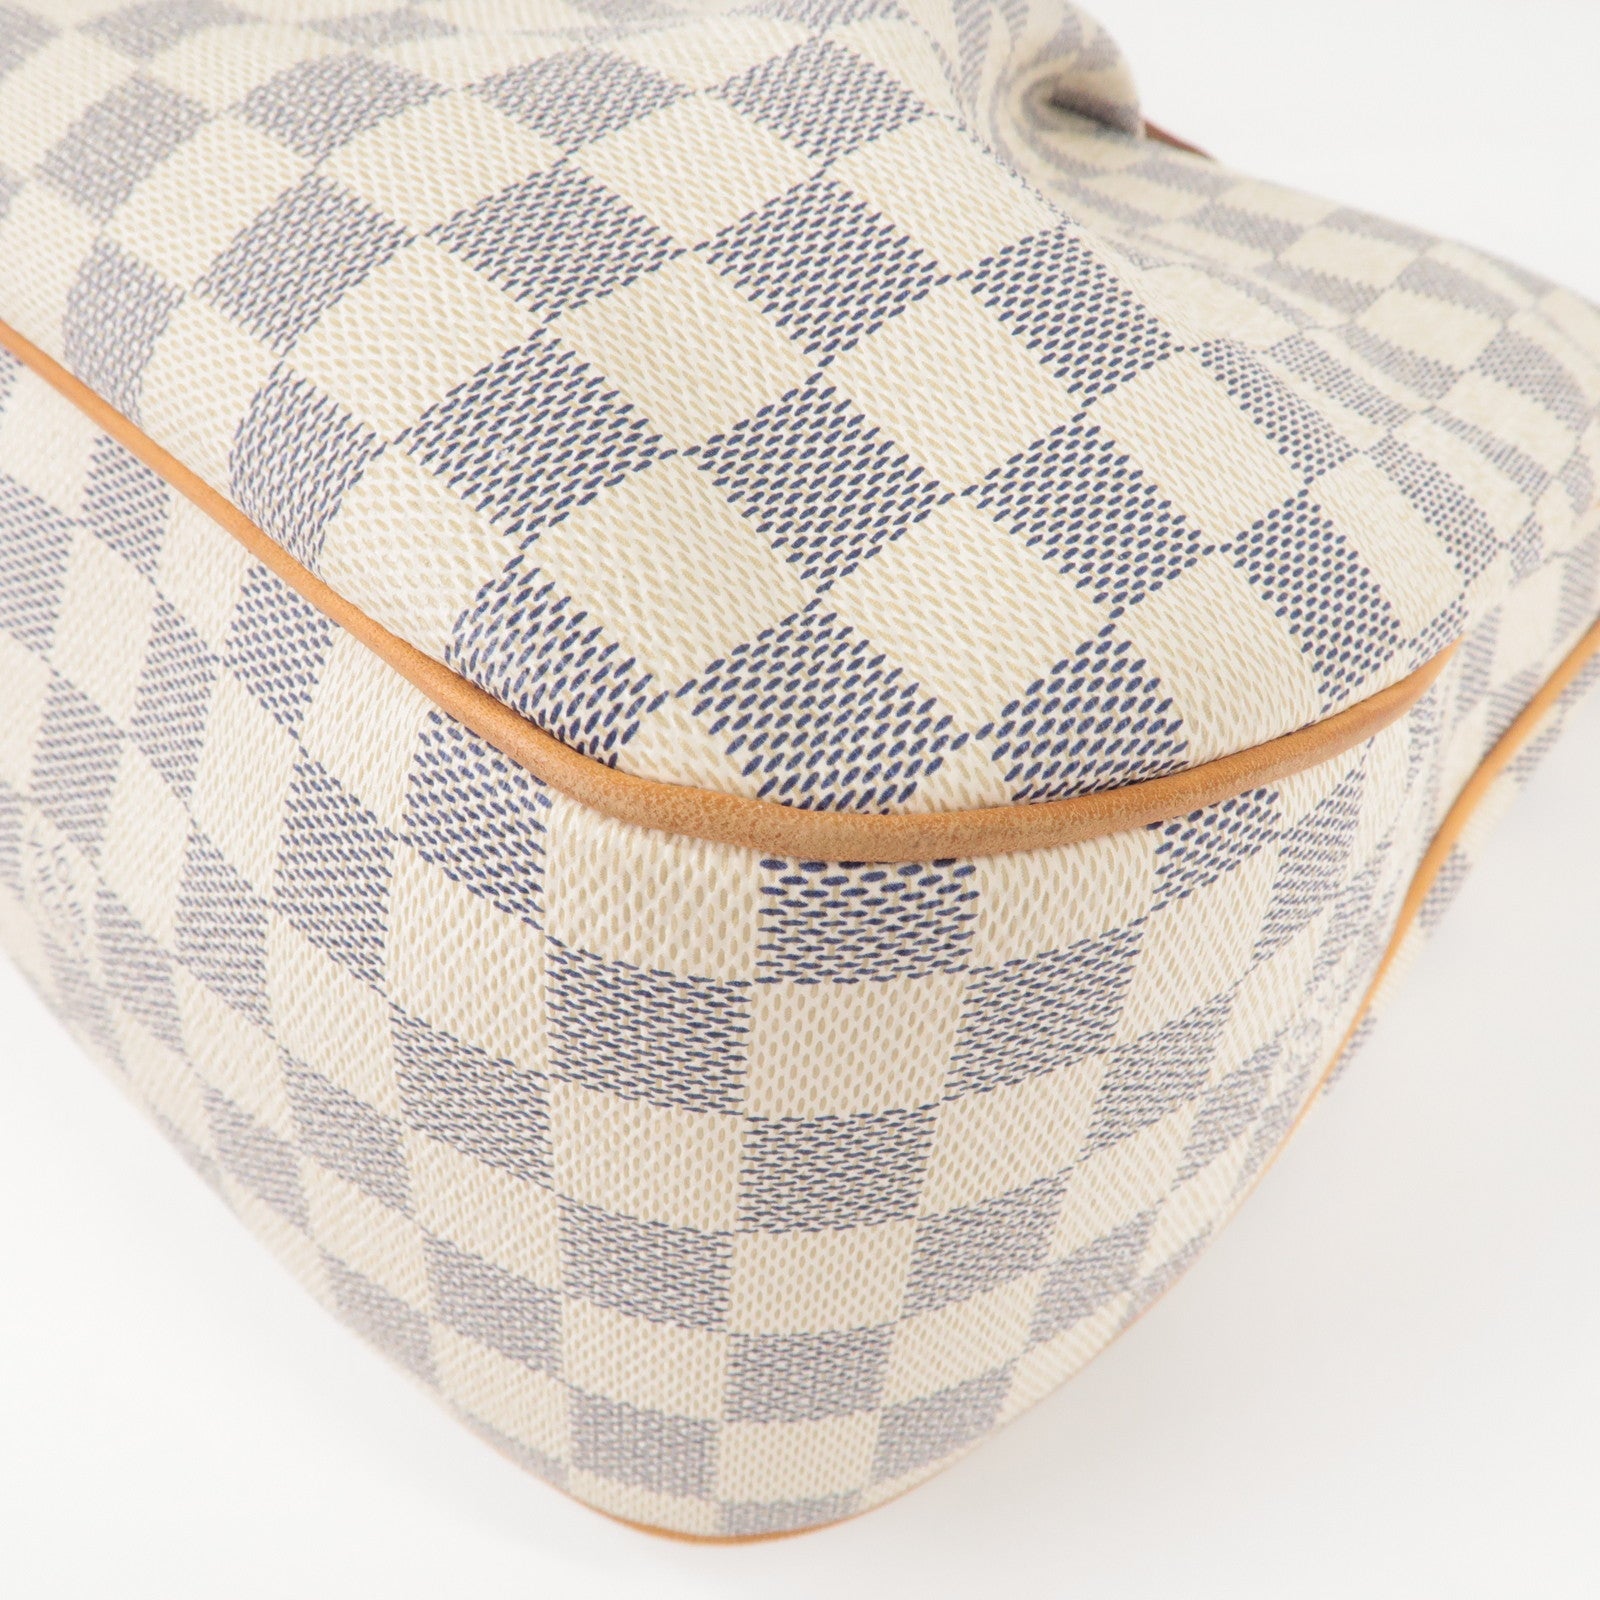 Louis Vuitton Damier Azur Canvas Siracusa MM Bag For Sale at